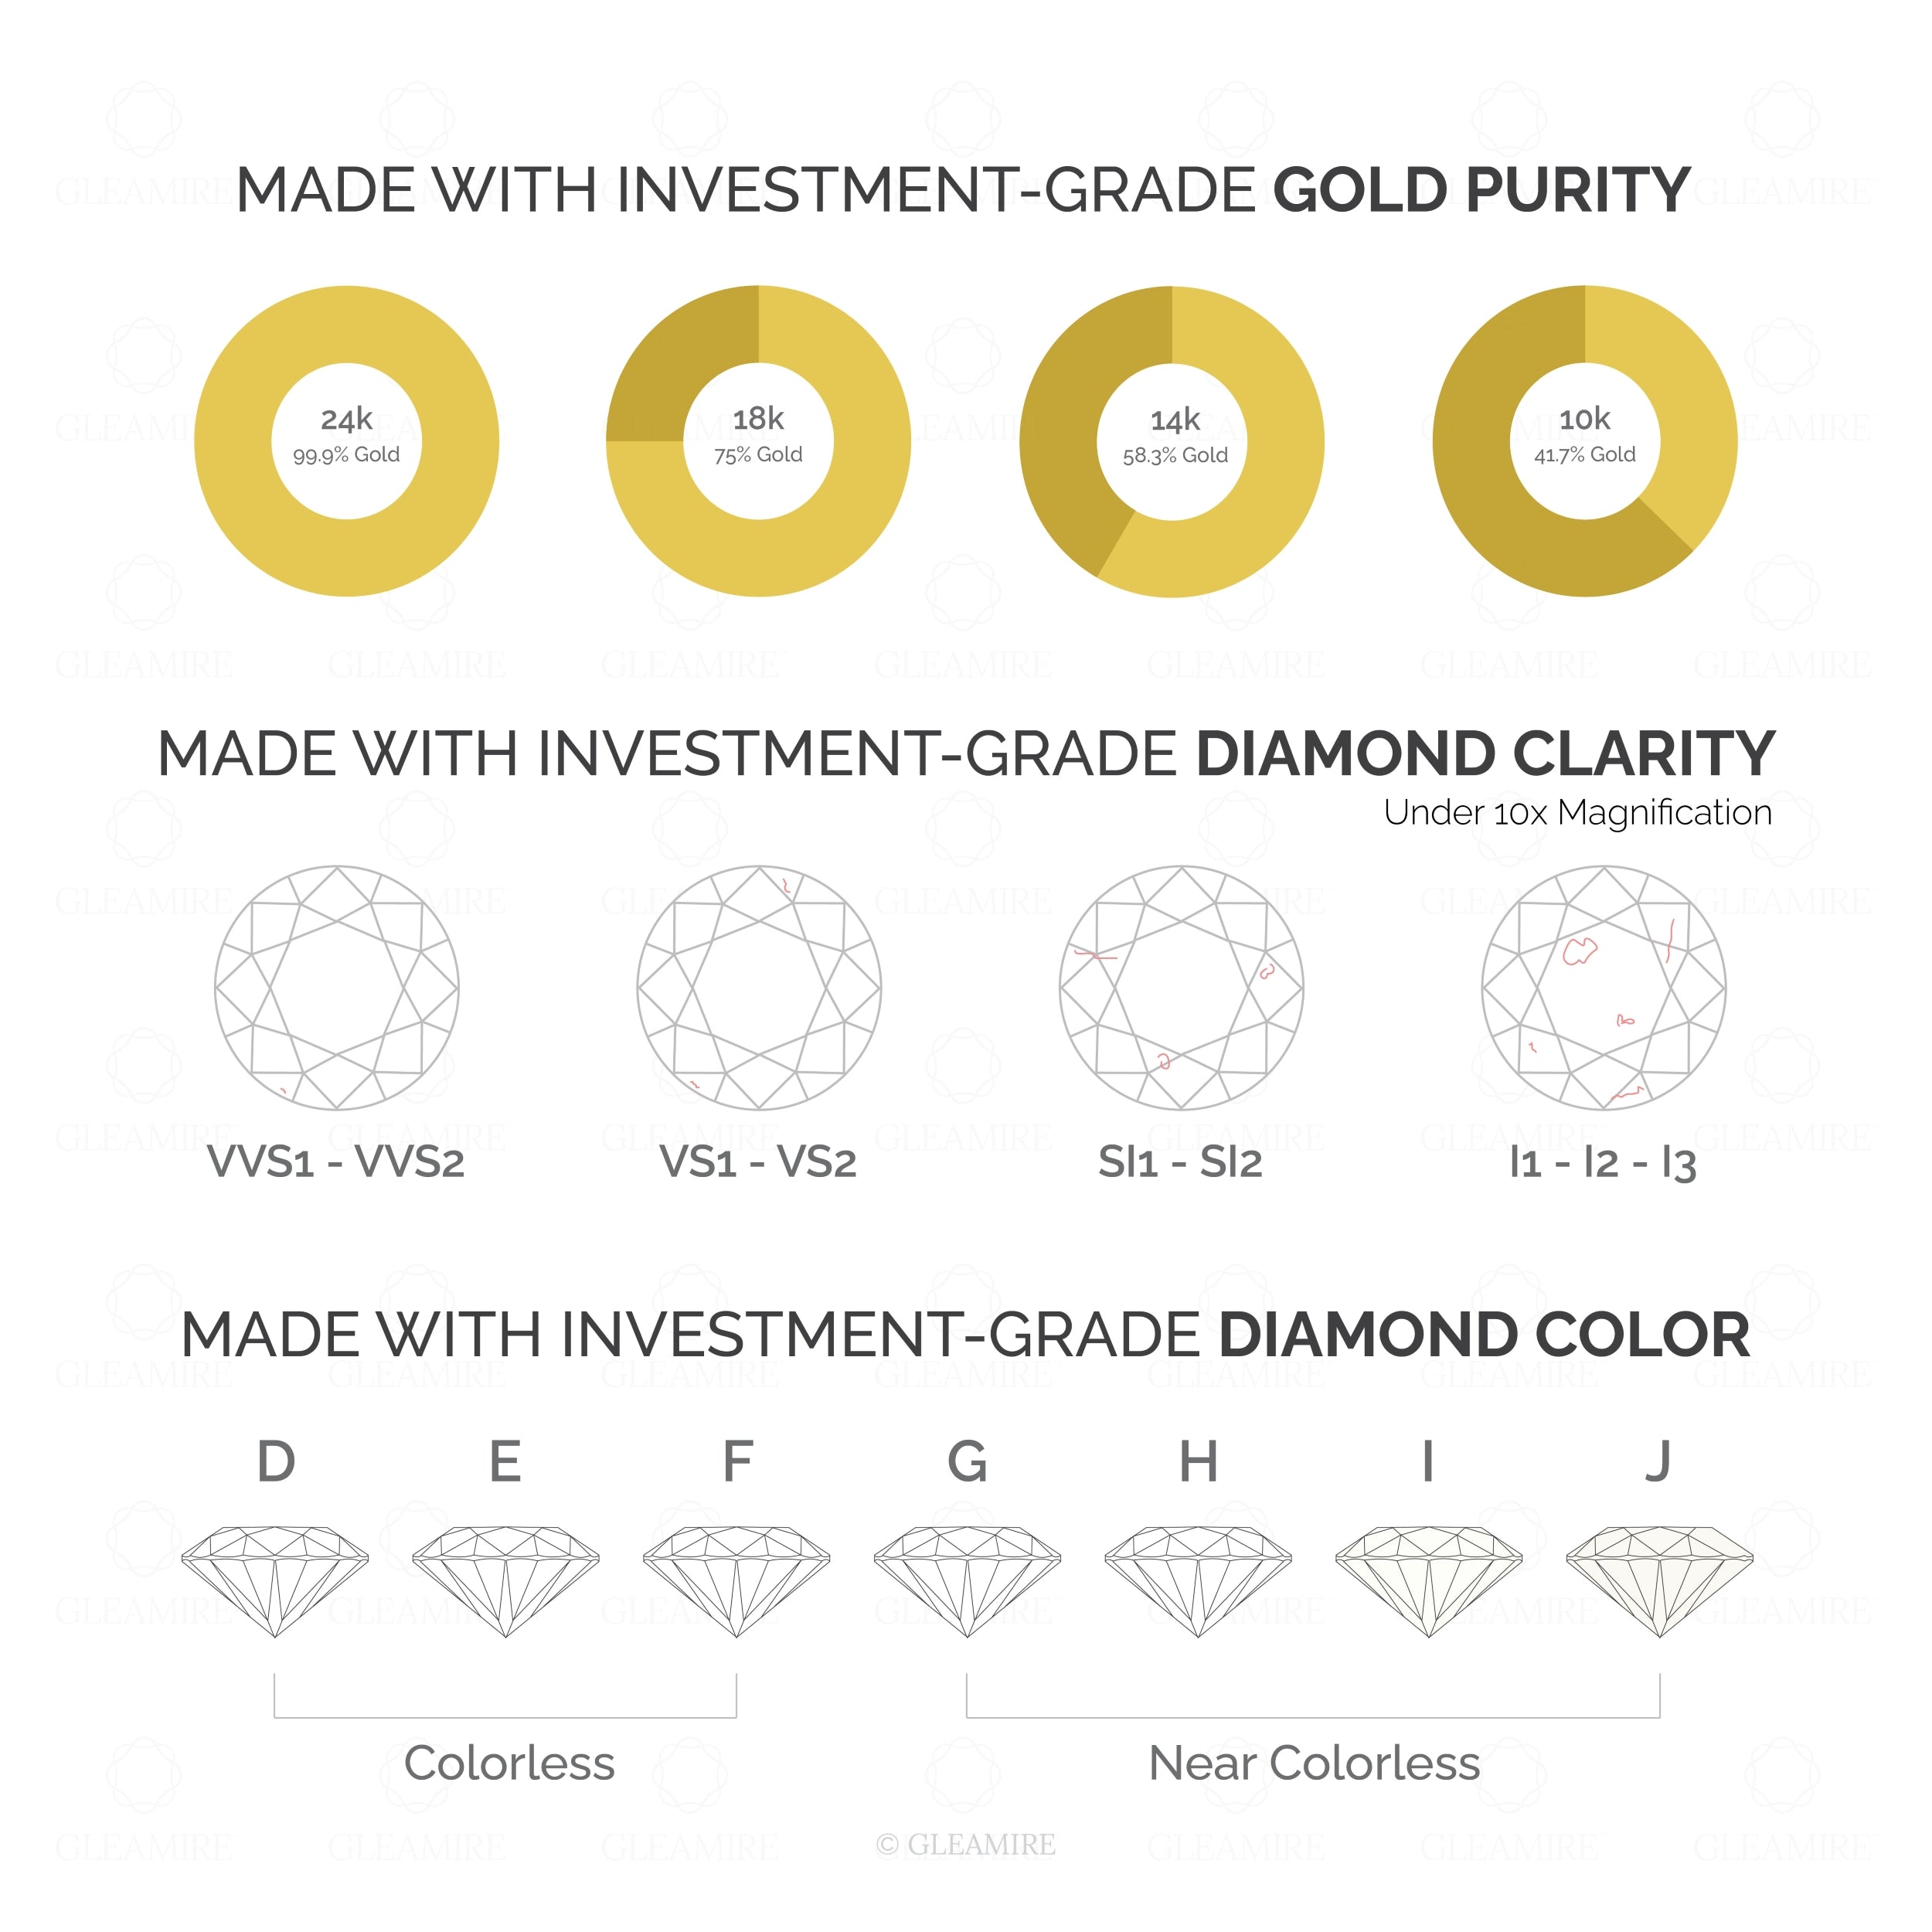 Certified 14K Gold 0.3ct Natural Diamond Designer Cross Yellow Ring